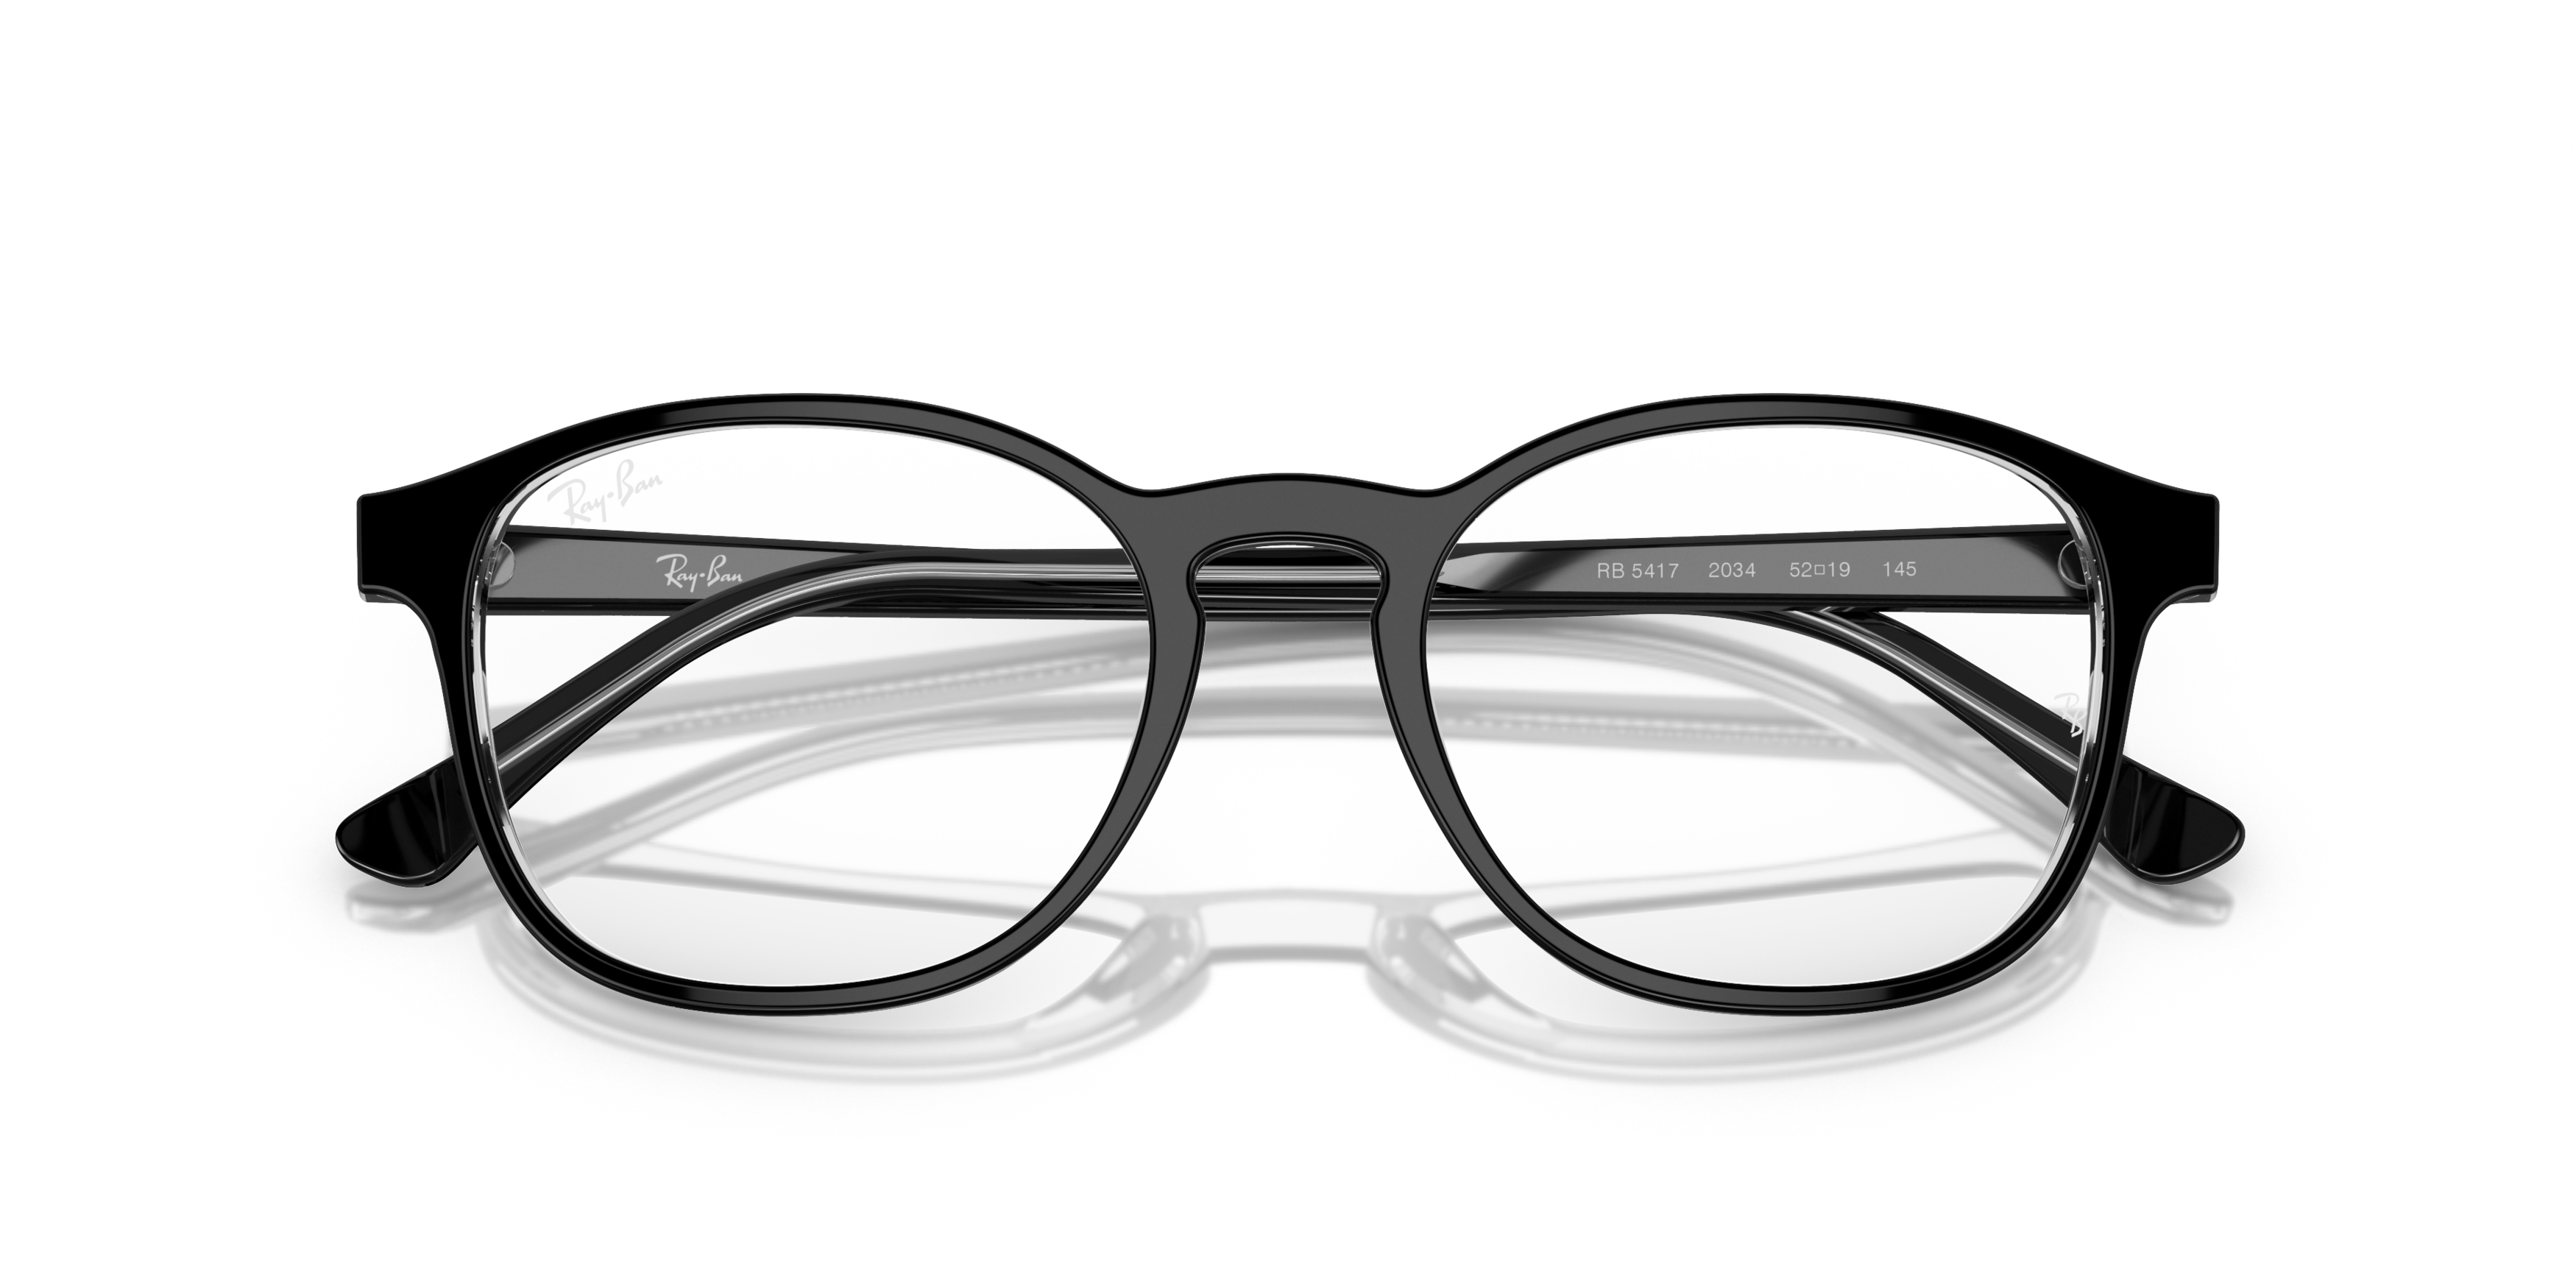 Folded Ray-Ban RX 5417 (2034) Glasses Transparent / Black